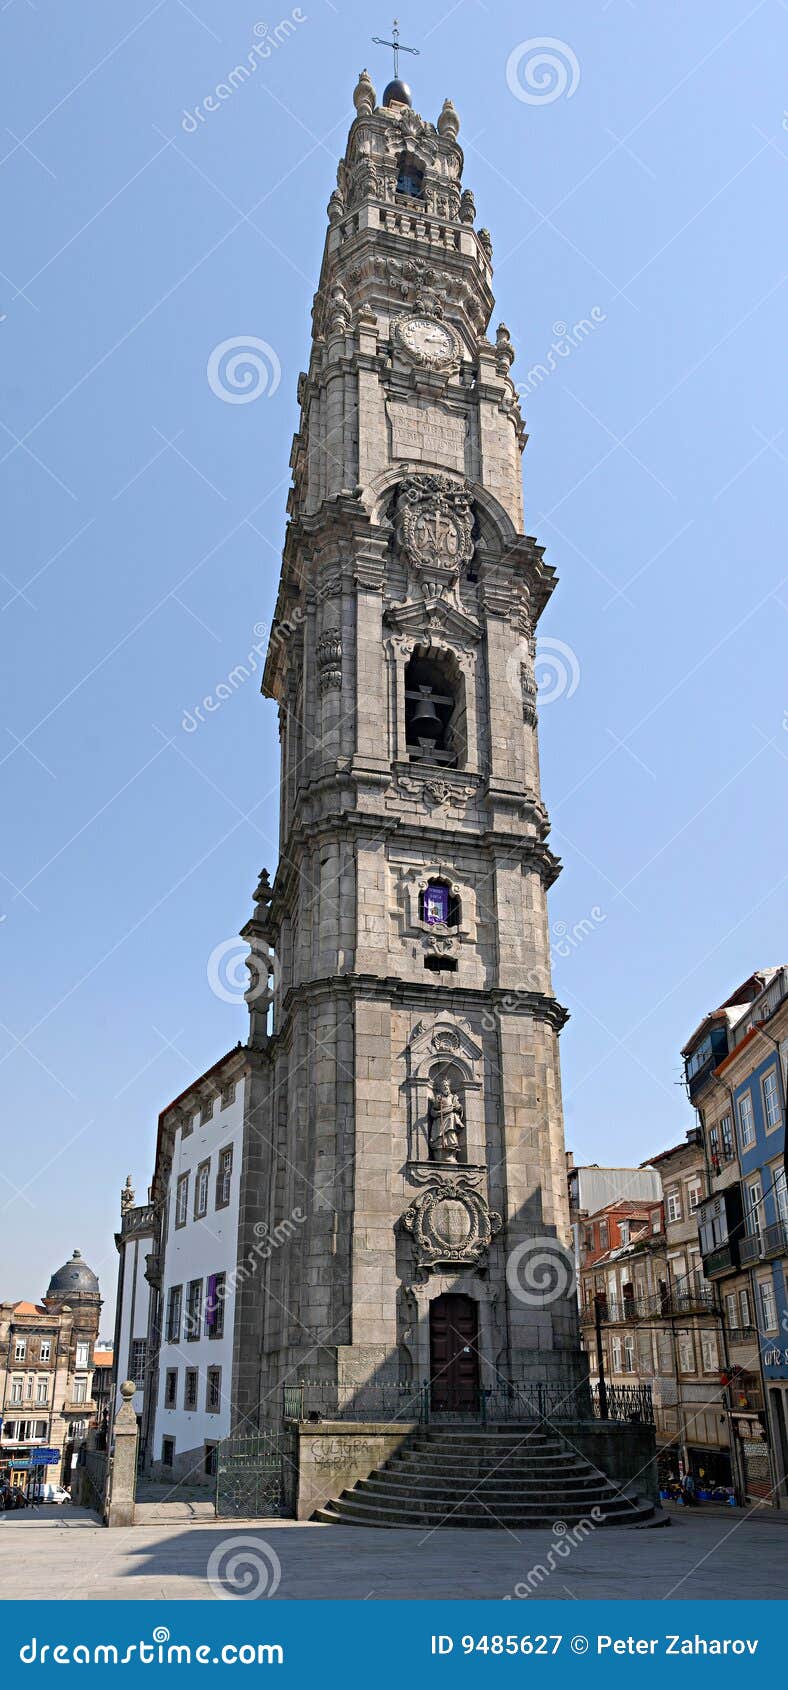 klerigush belltower in porto, portugal